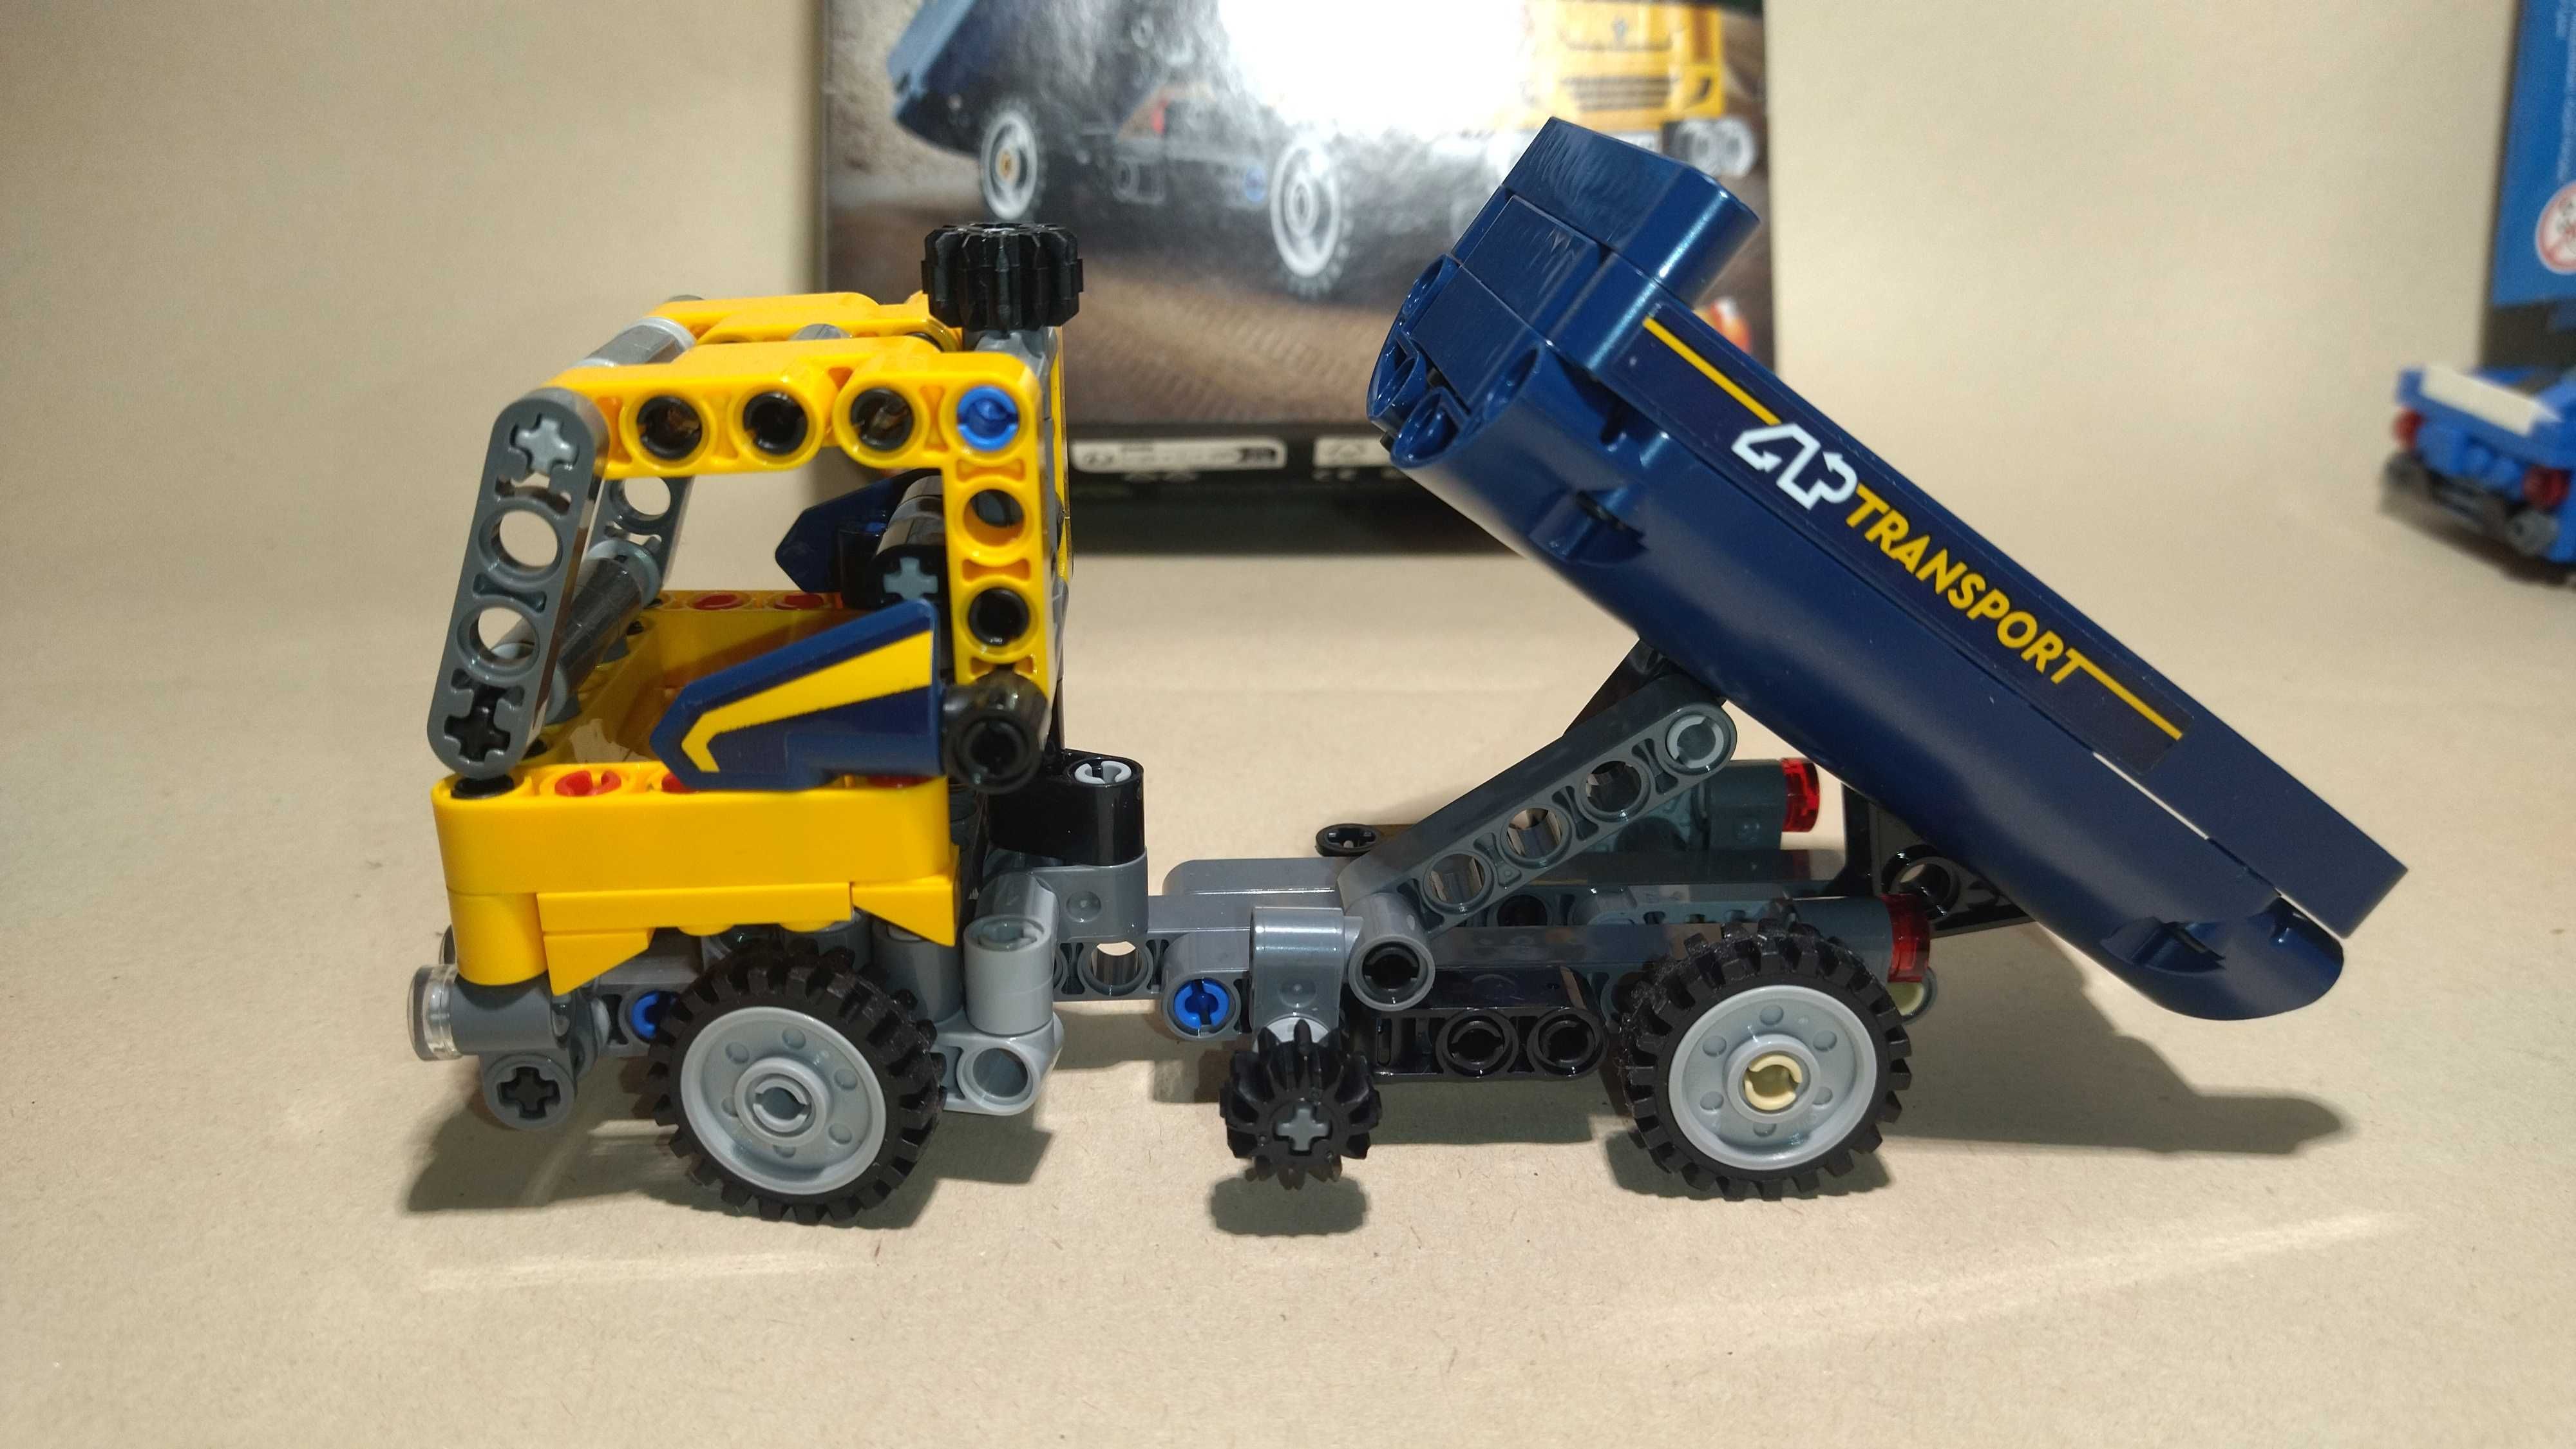 Конструктор LEGO Technic Самосвал, LEGO грузовик, лего грузовик